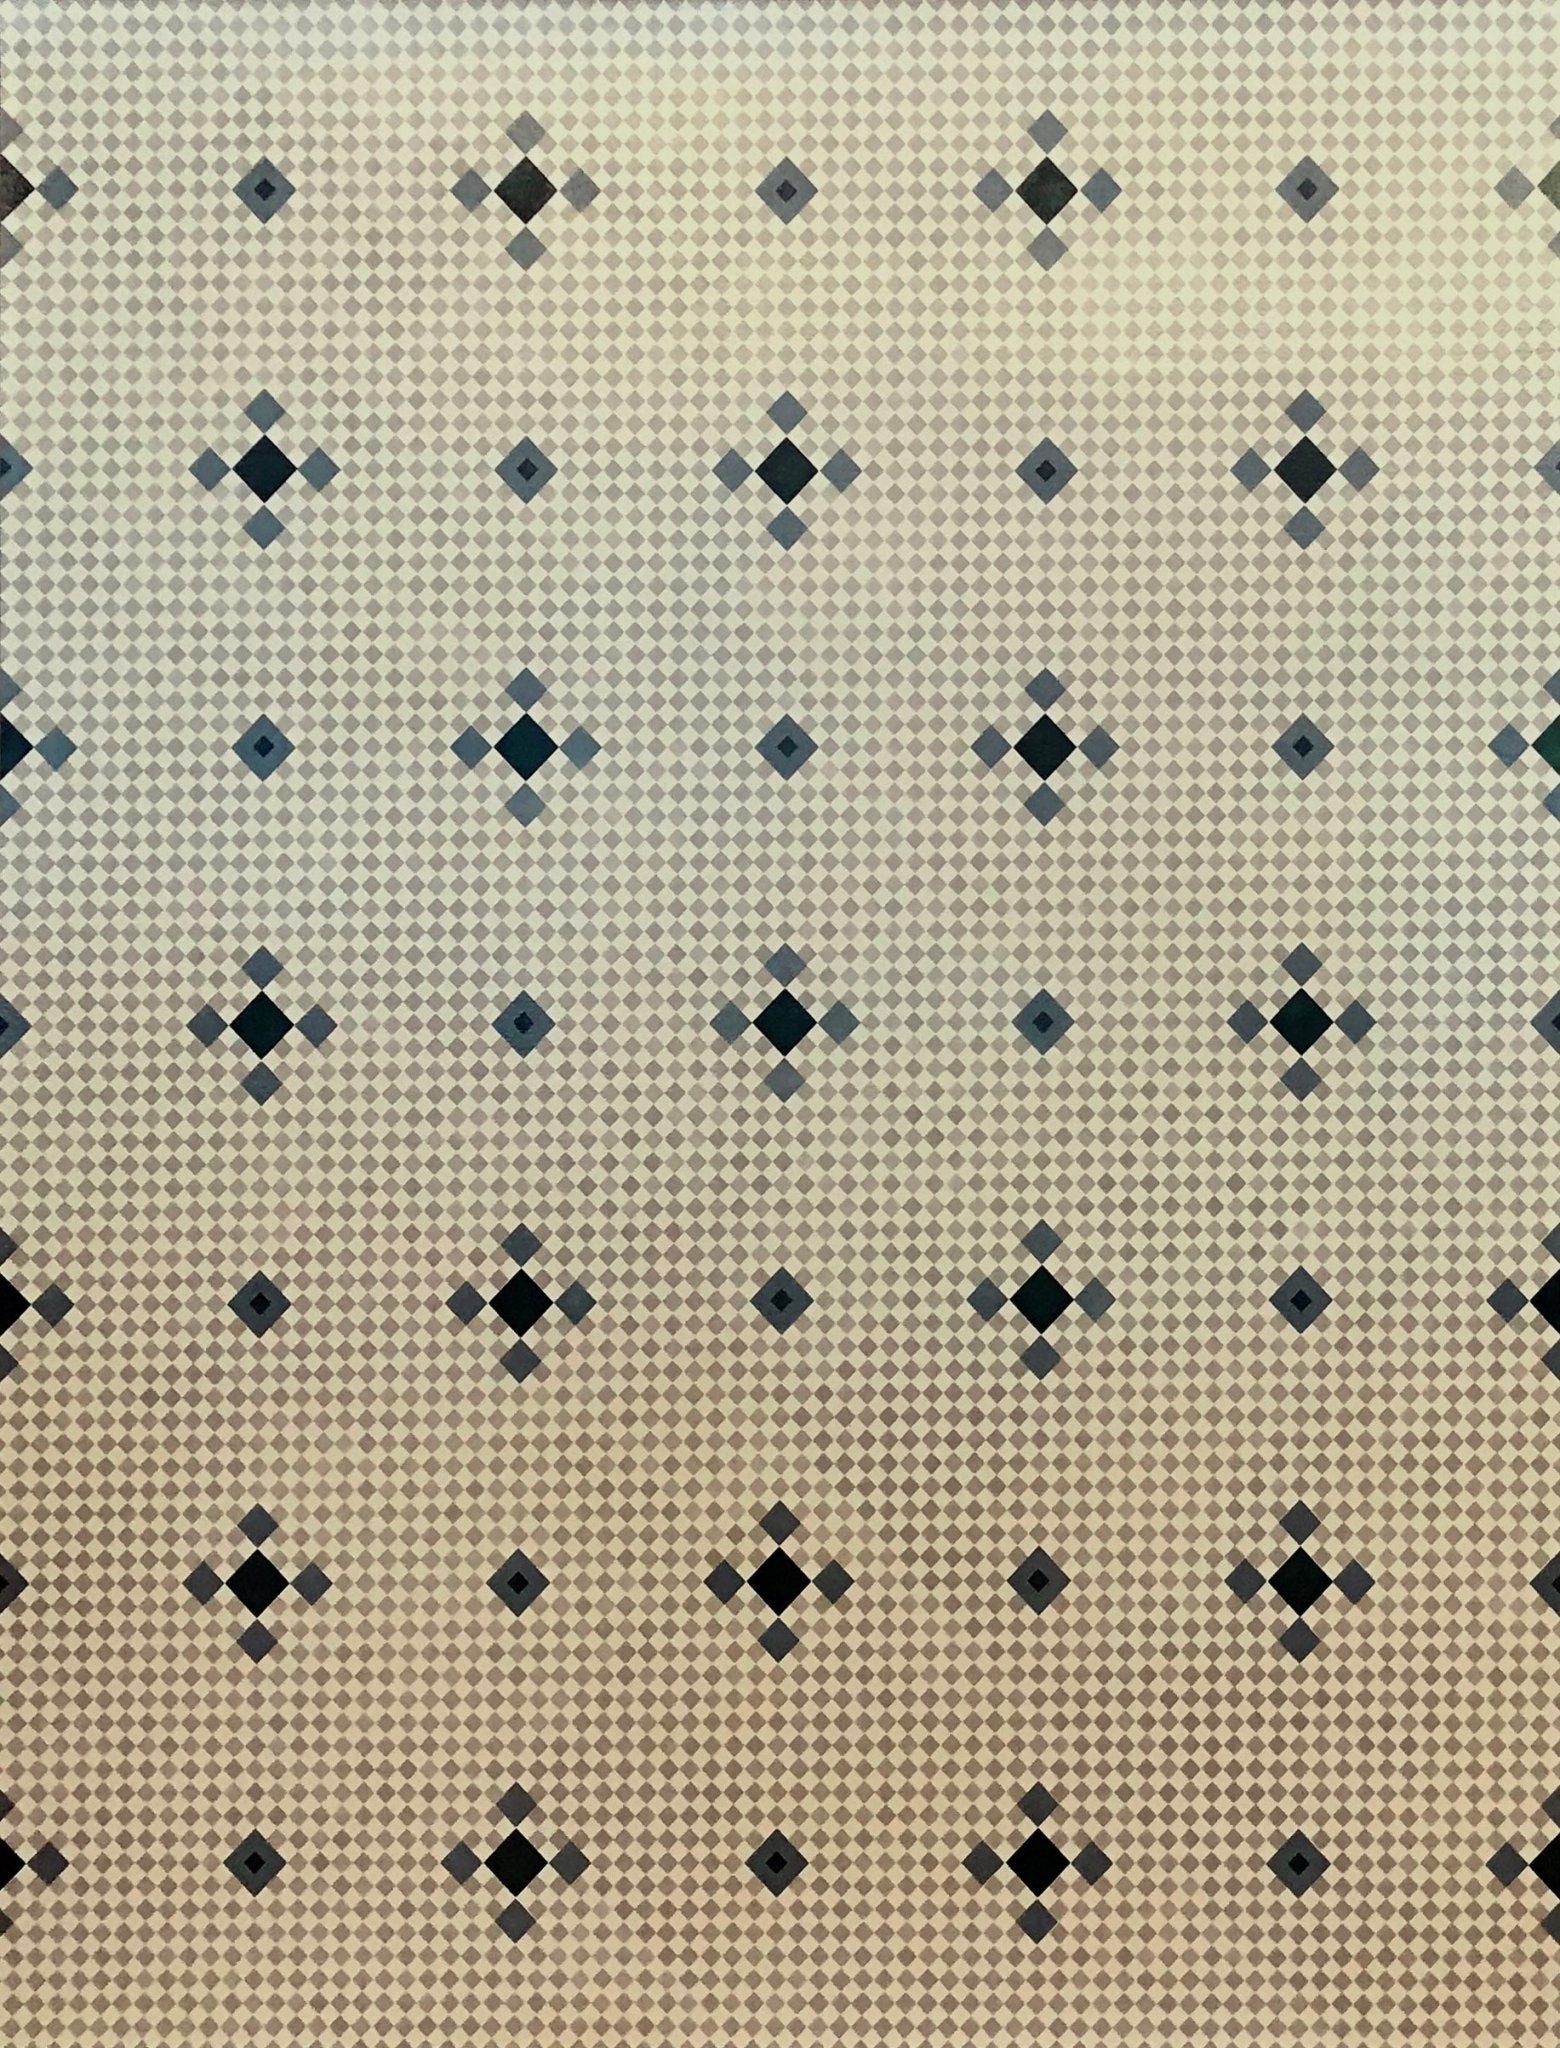 This floorcloth is based on an original linoleum pattern.